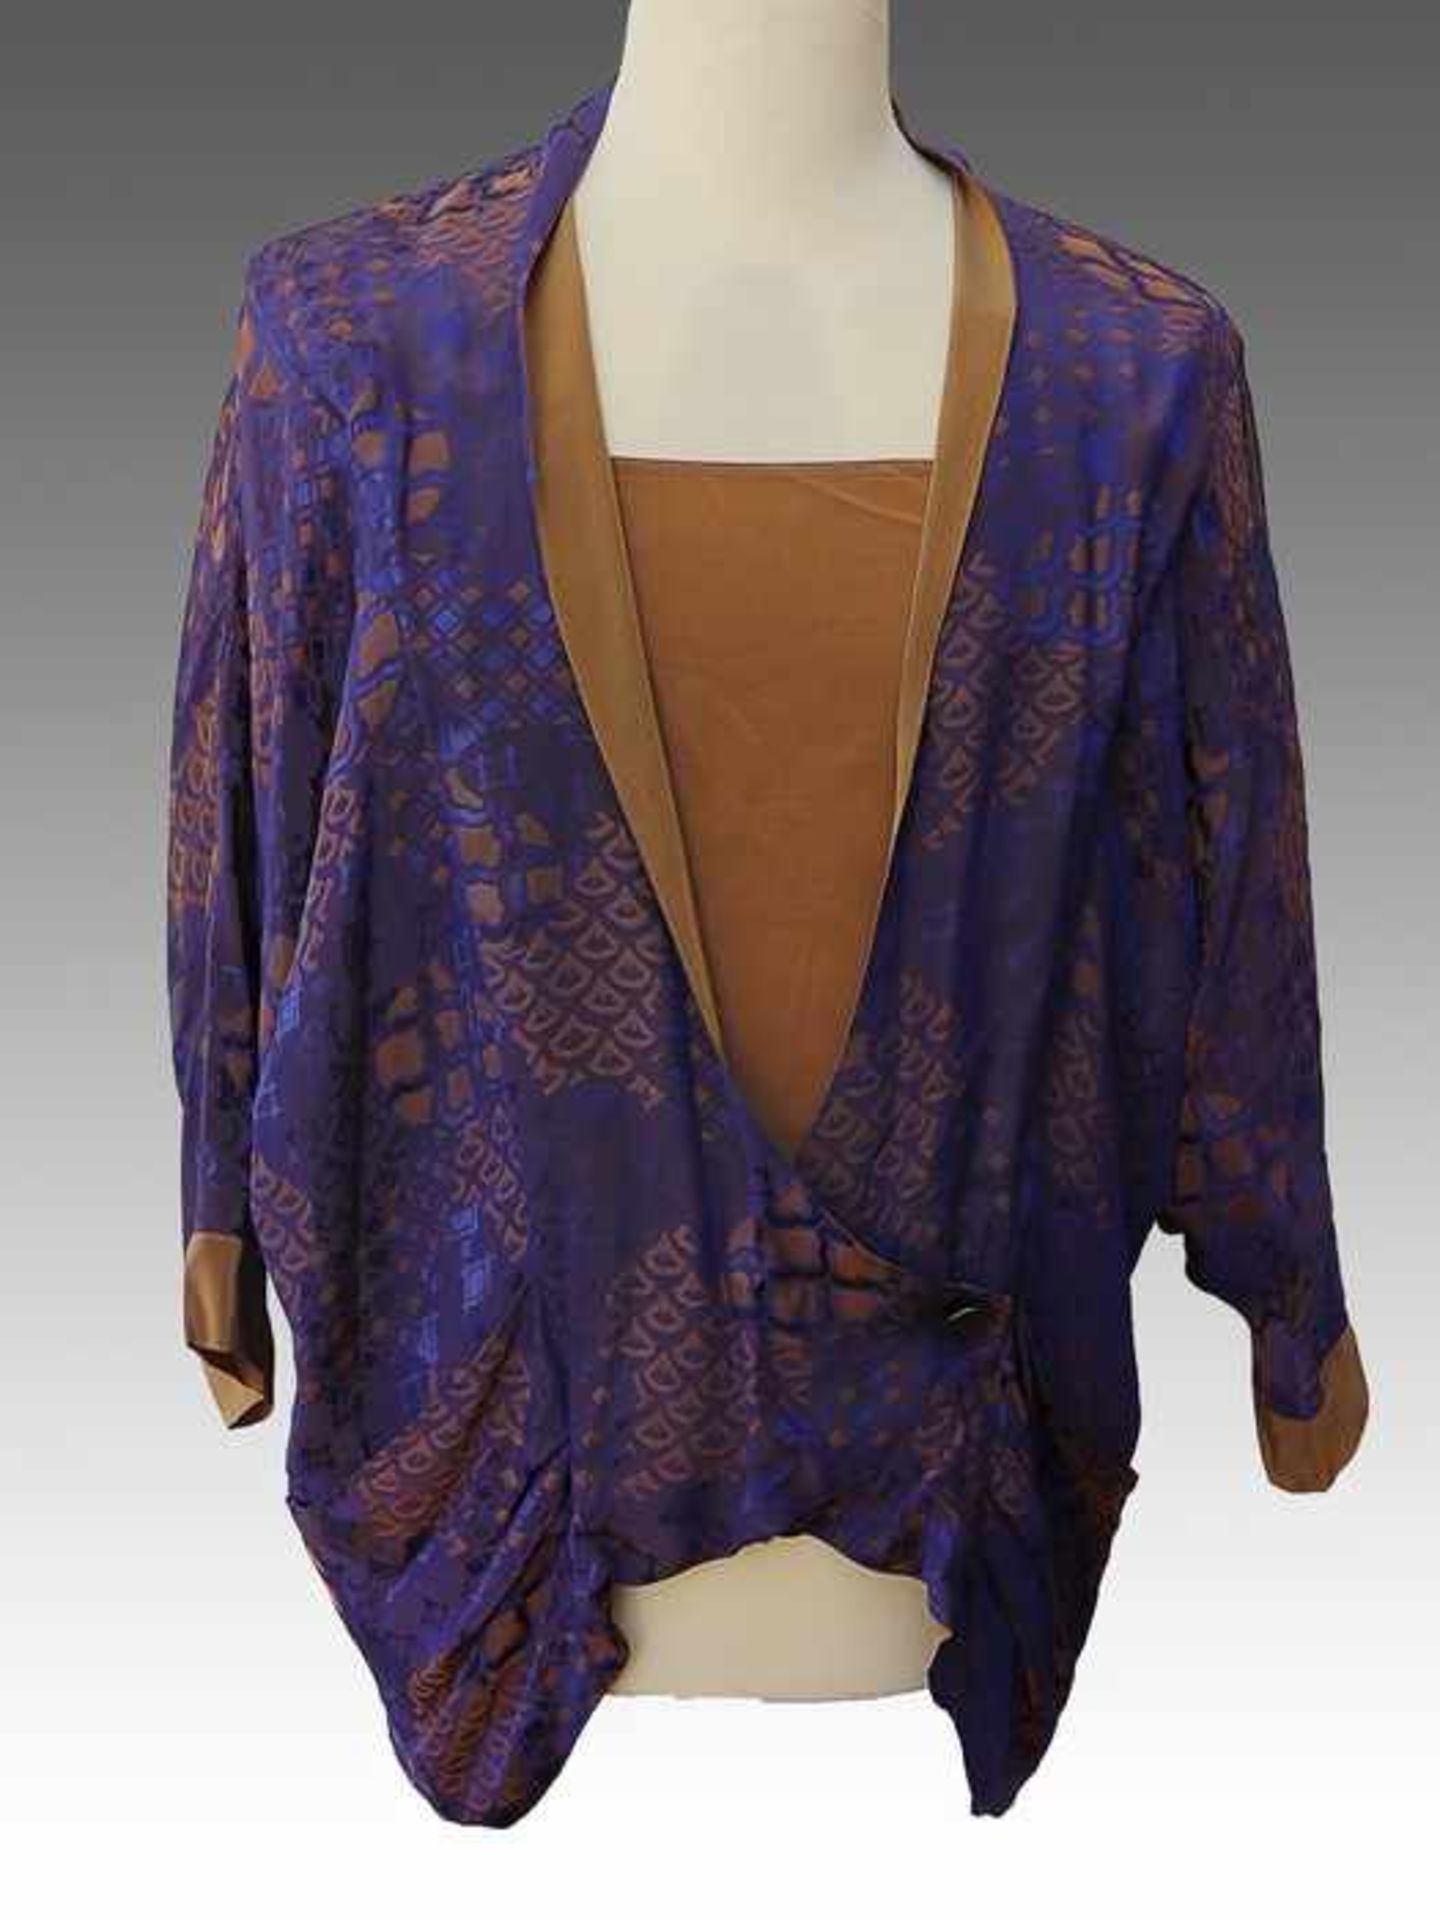 Tiffany exclusiv - Kostüm1980er J., Vintage, 1 Rock, 1 Weste, 1 Blusenjacke, lila changierend, - Bild 2 aus 4